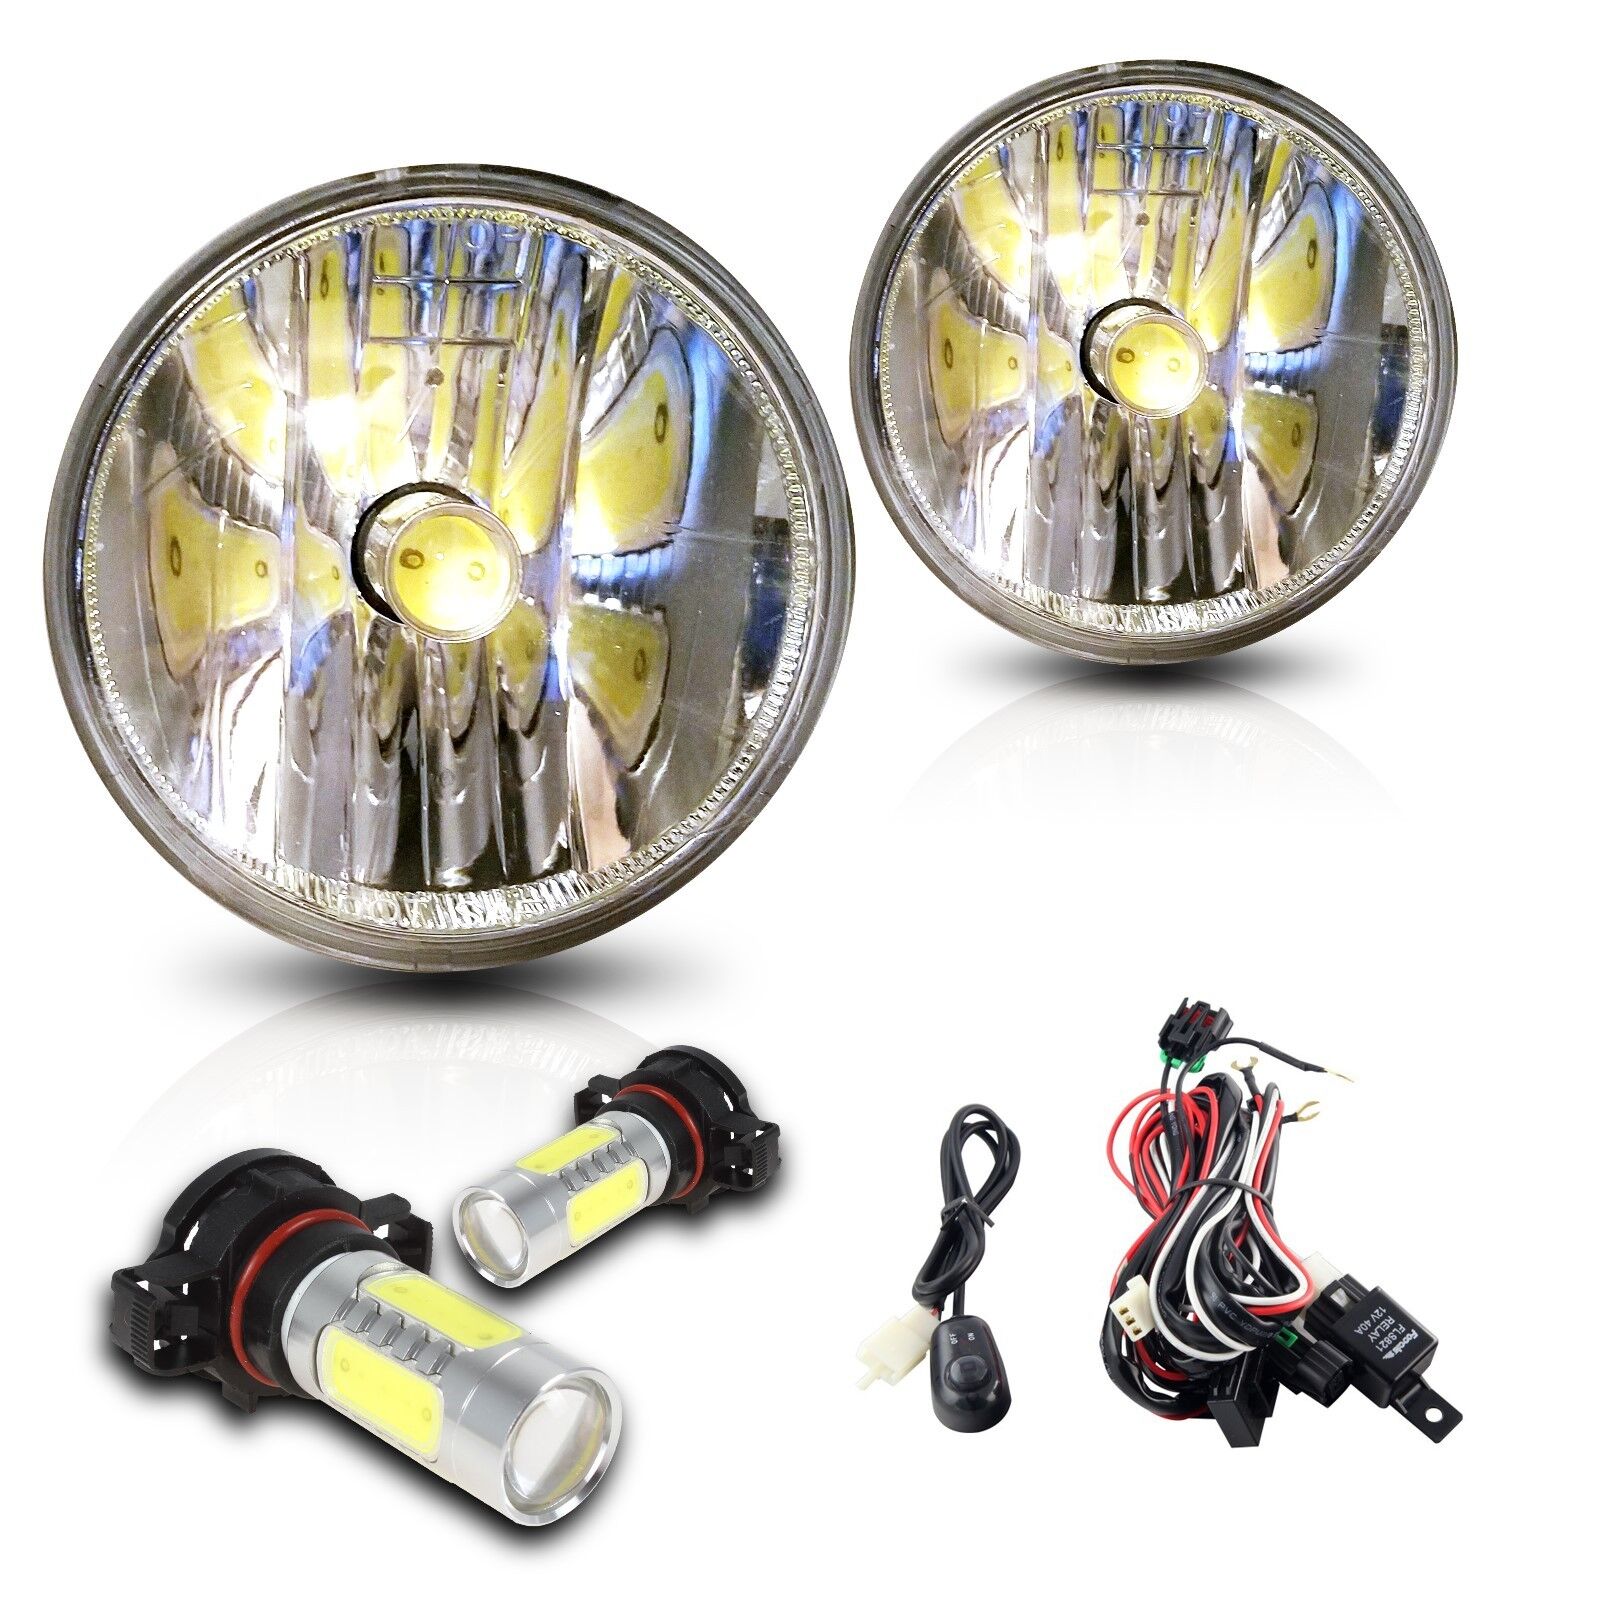 For Pontiac 08-09 G8 & 2010 G6 Lights w/Wiring Kit & COB LED Bulbs - Clear